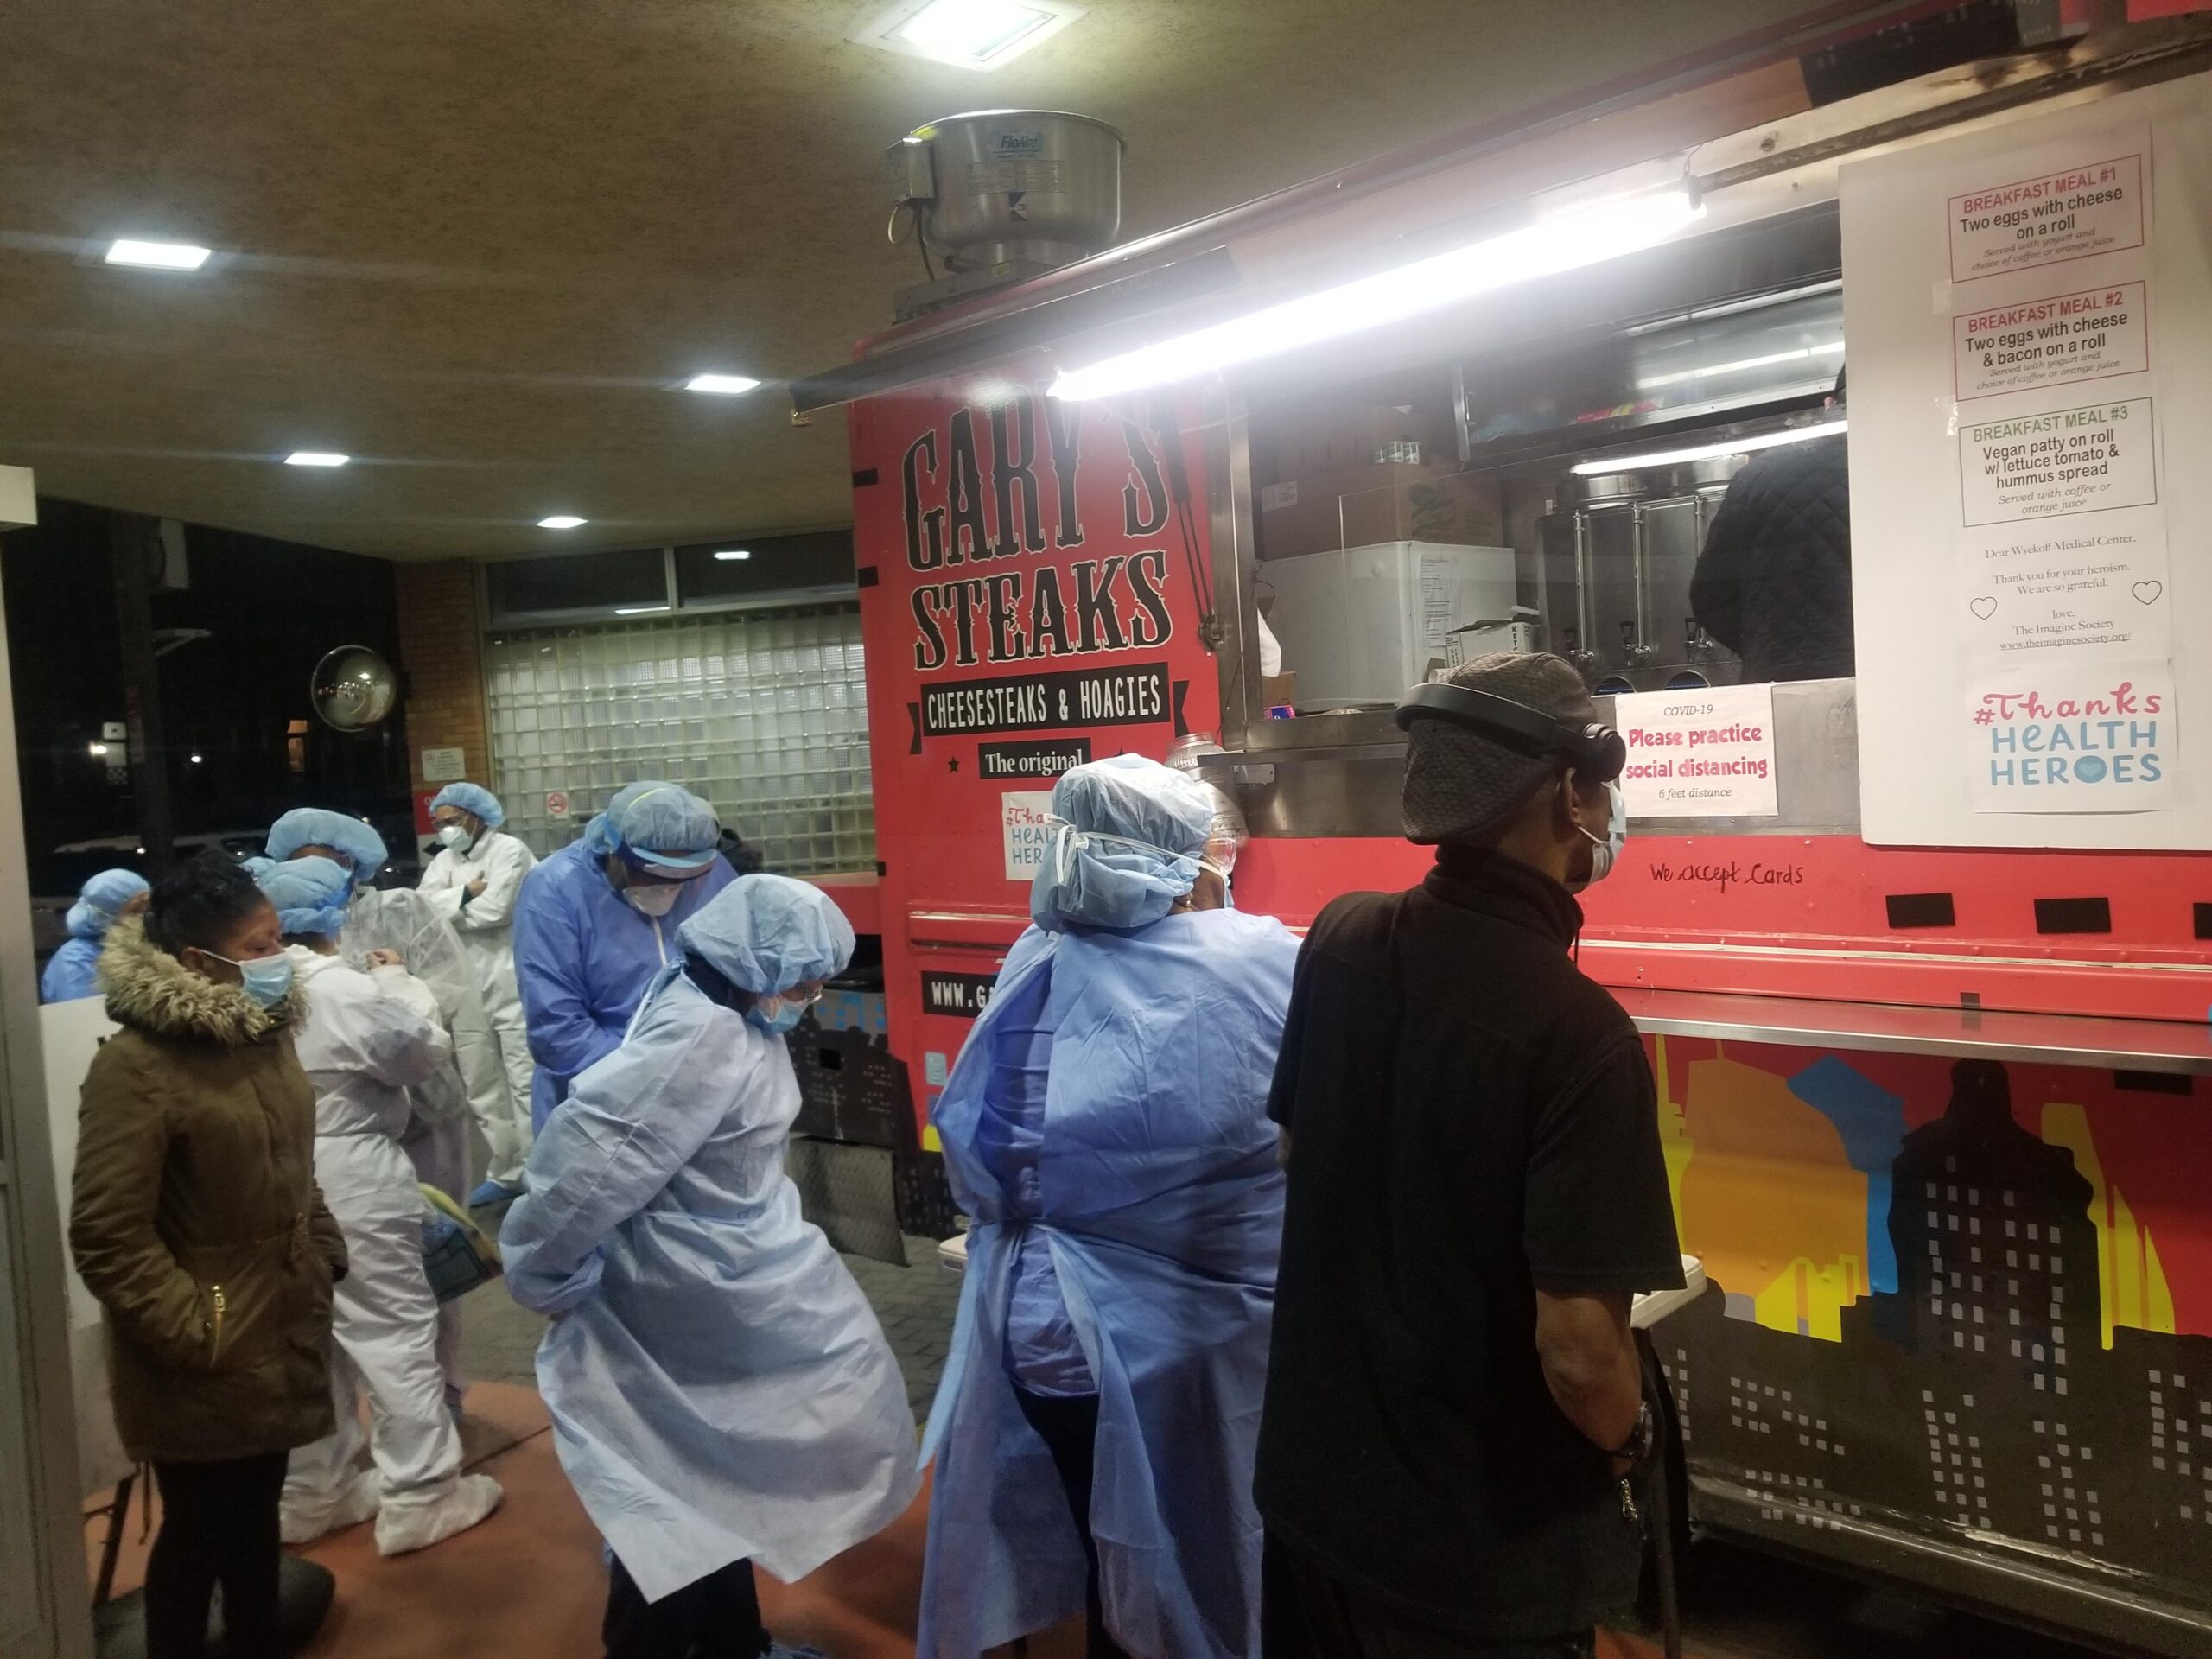 Food truck catering hospital doctors & nurses